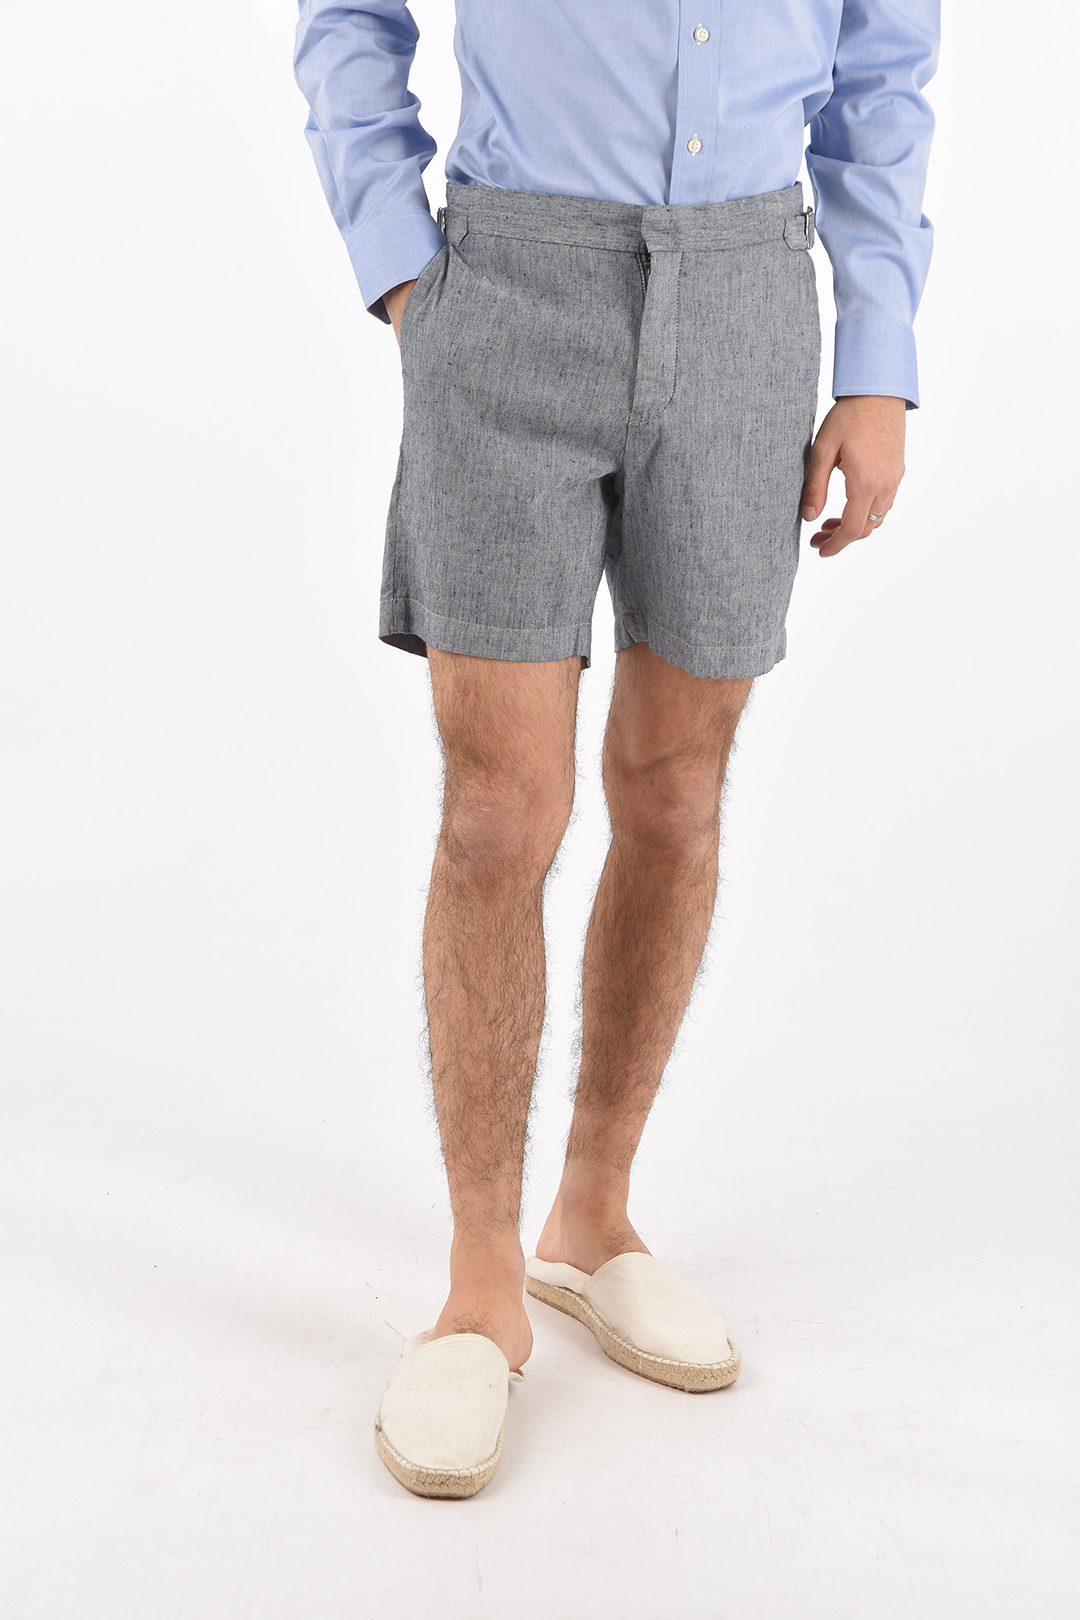 Michael Kors Shorts with Side Adjusters men - Glamood Outlet